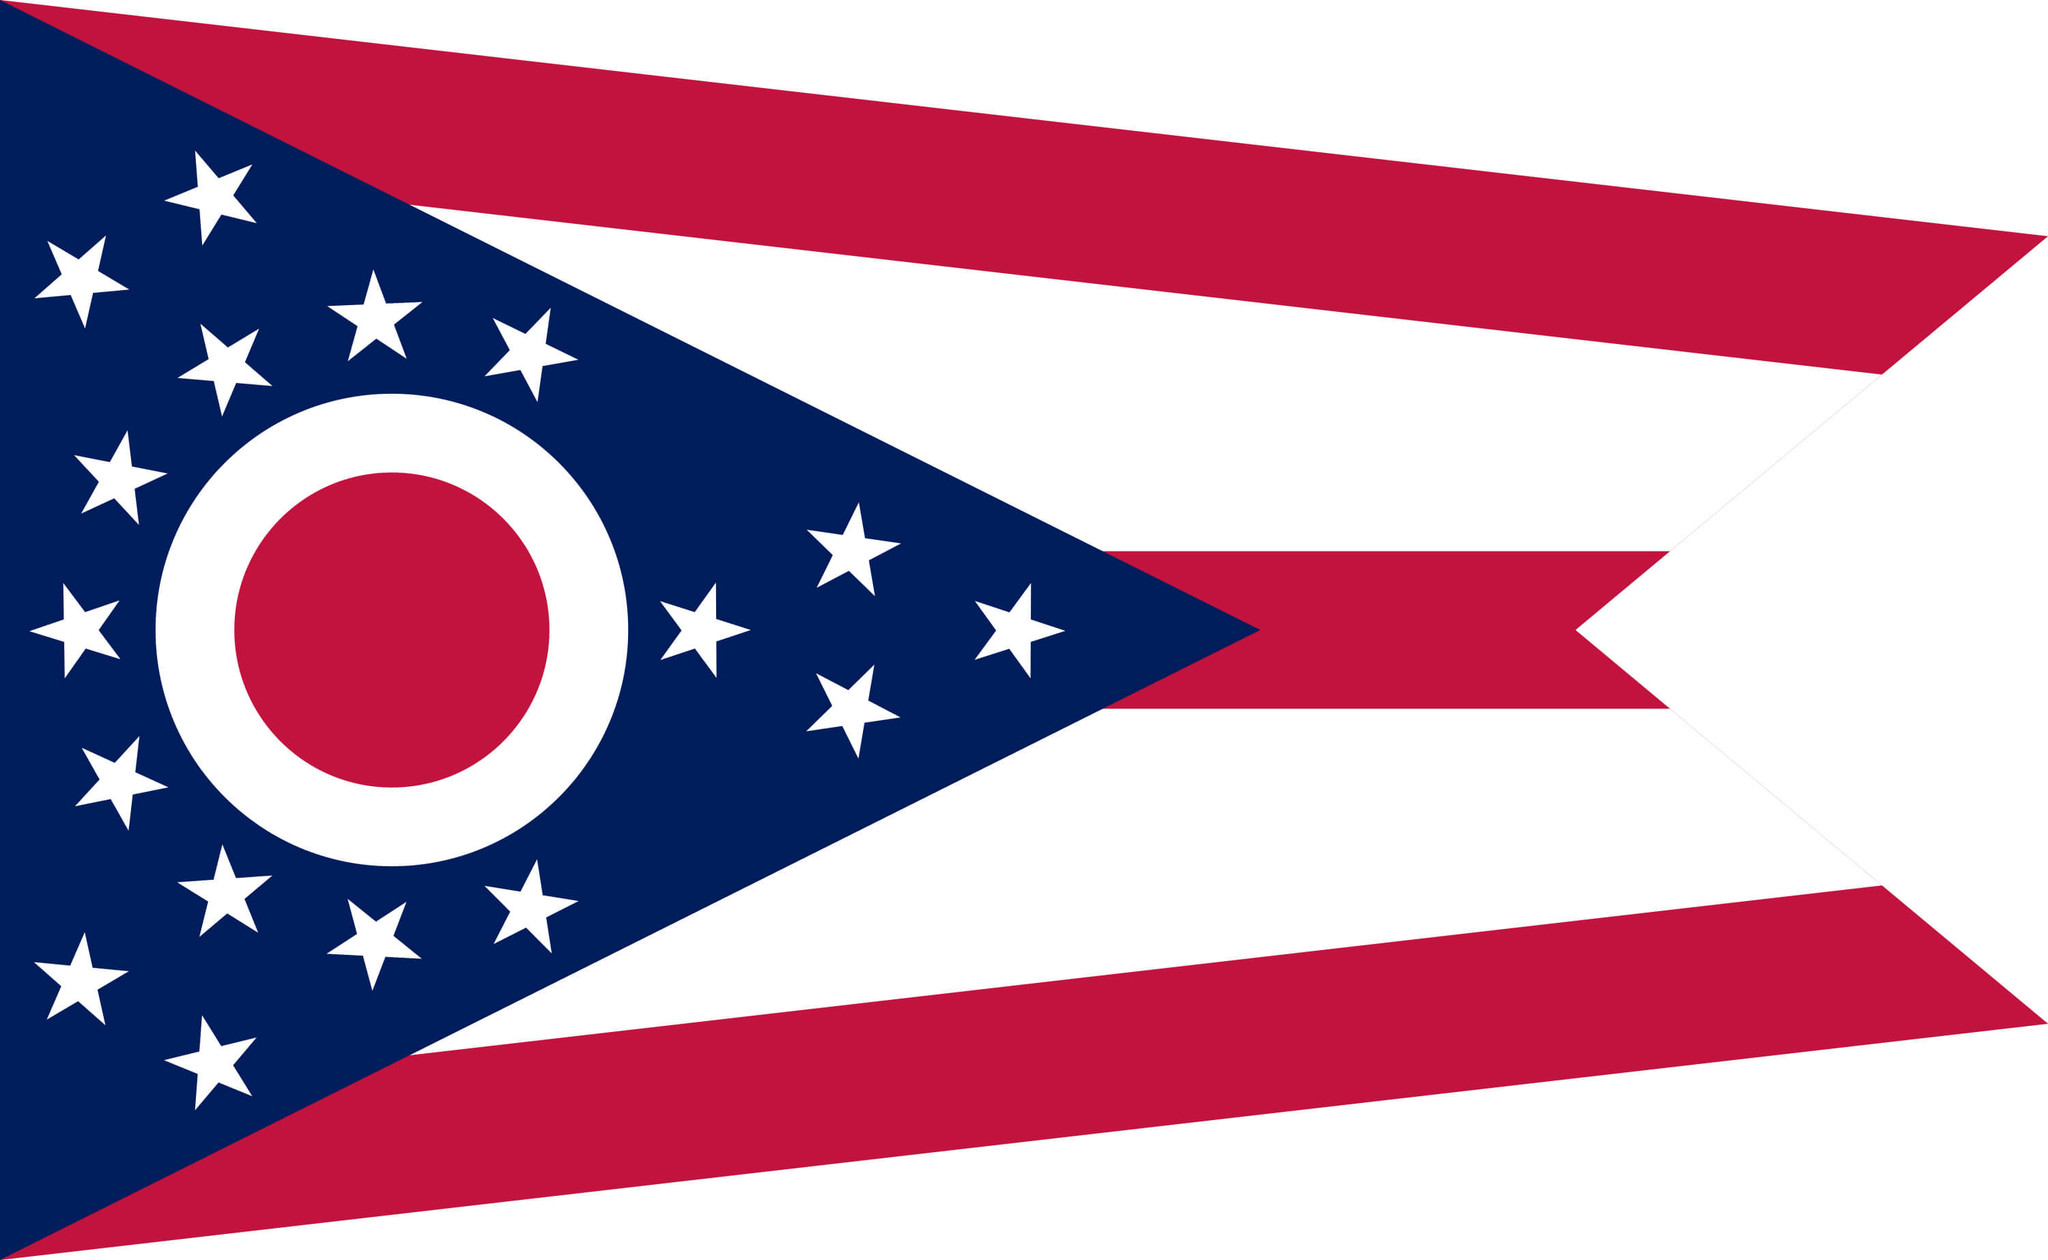 Flagge von Ohio